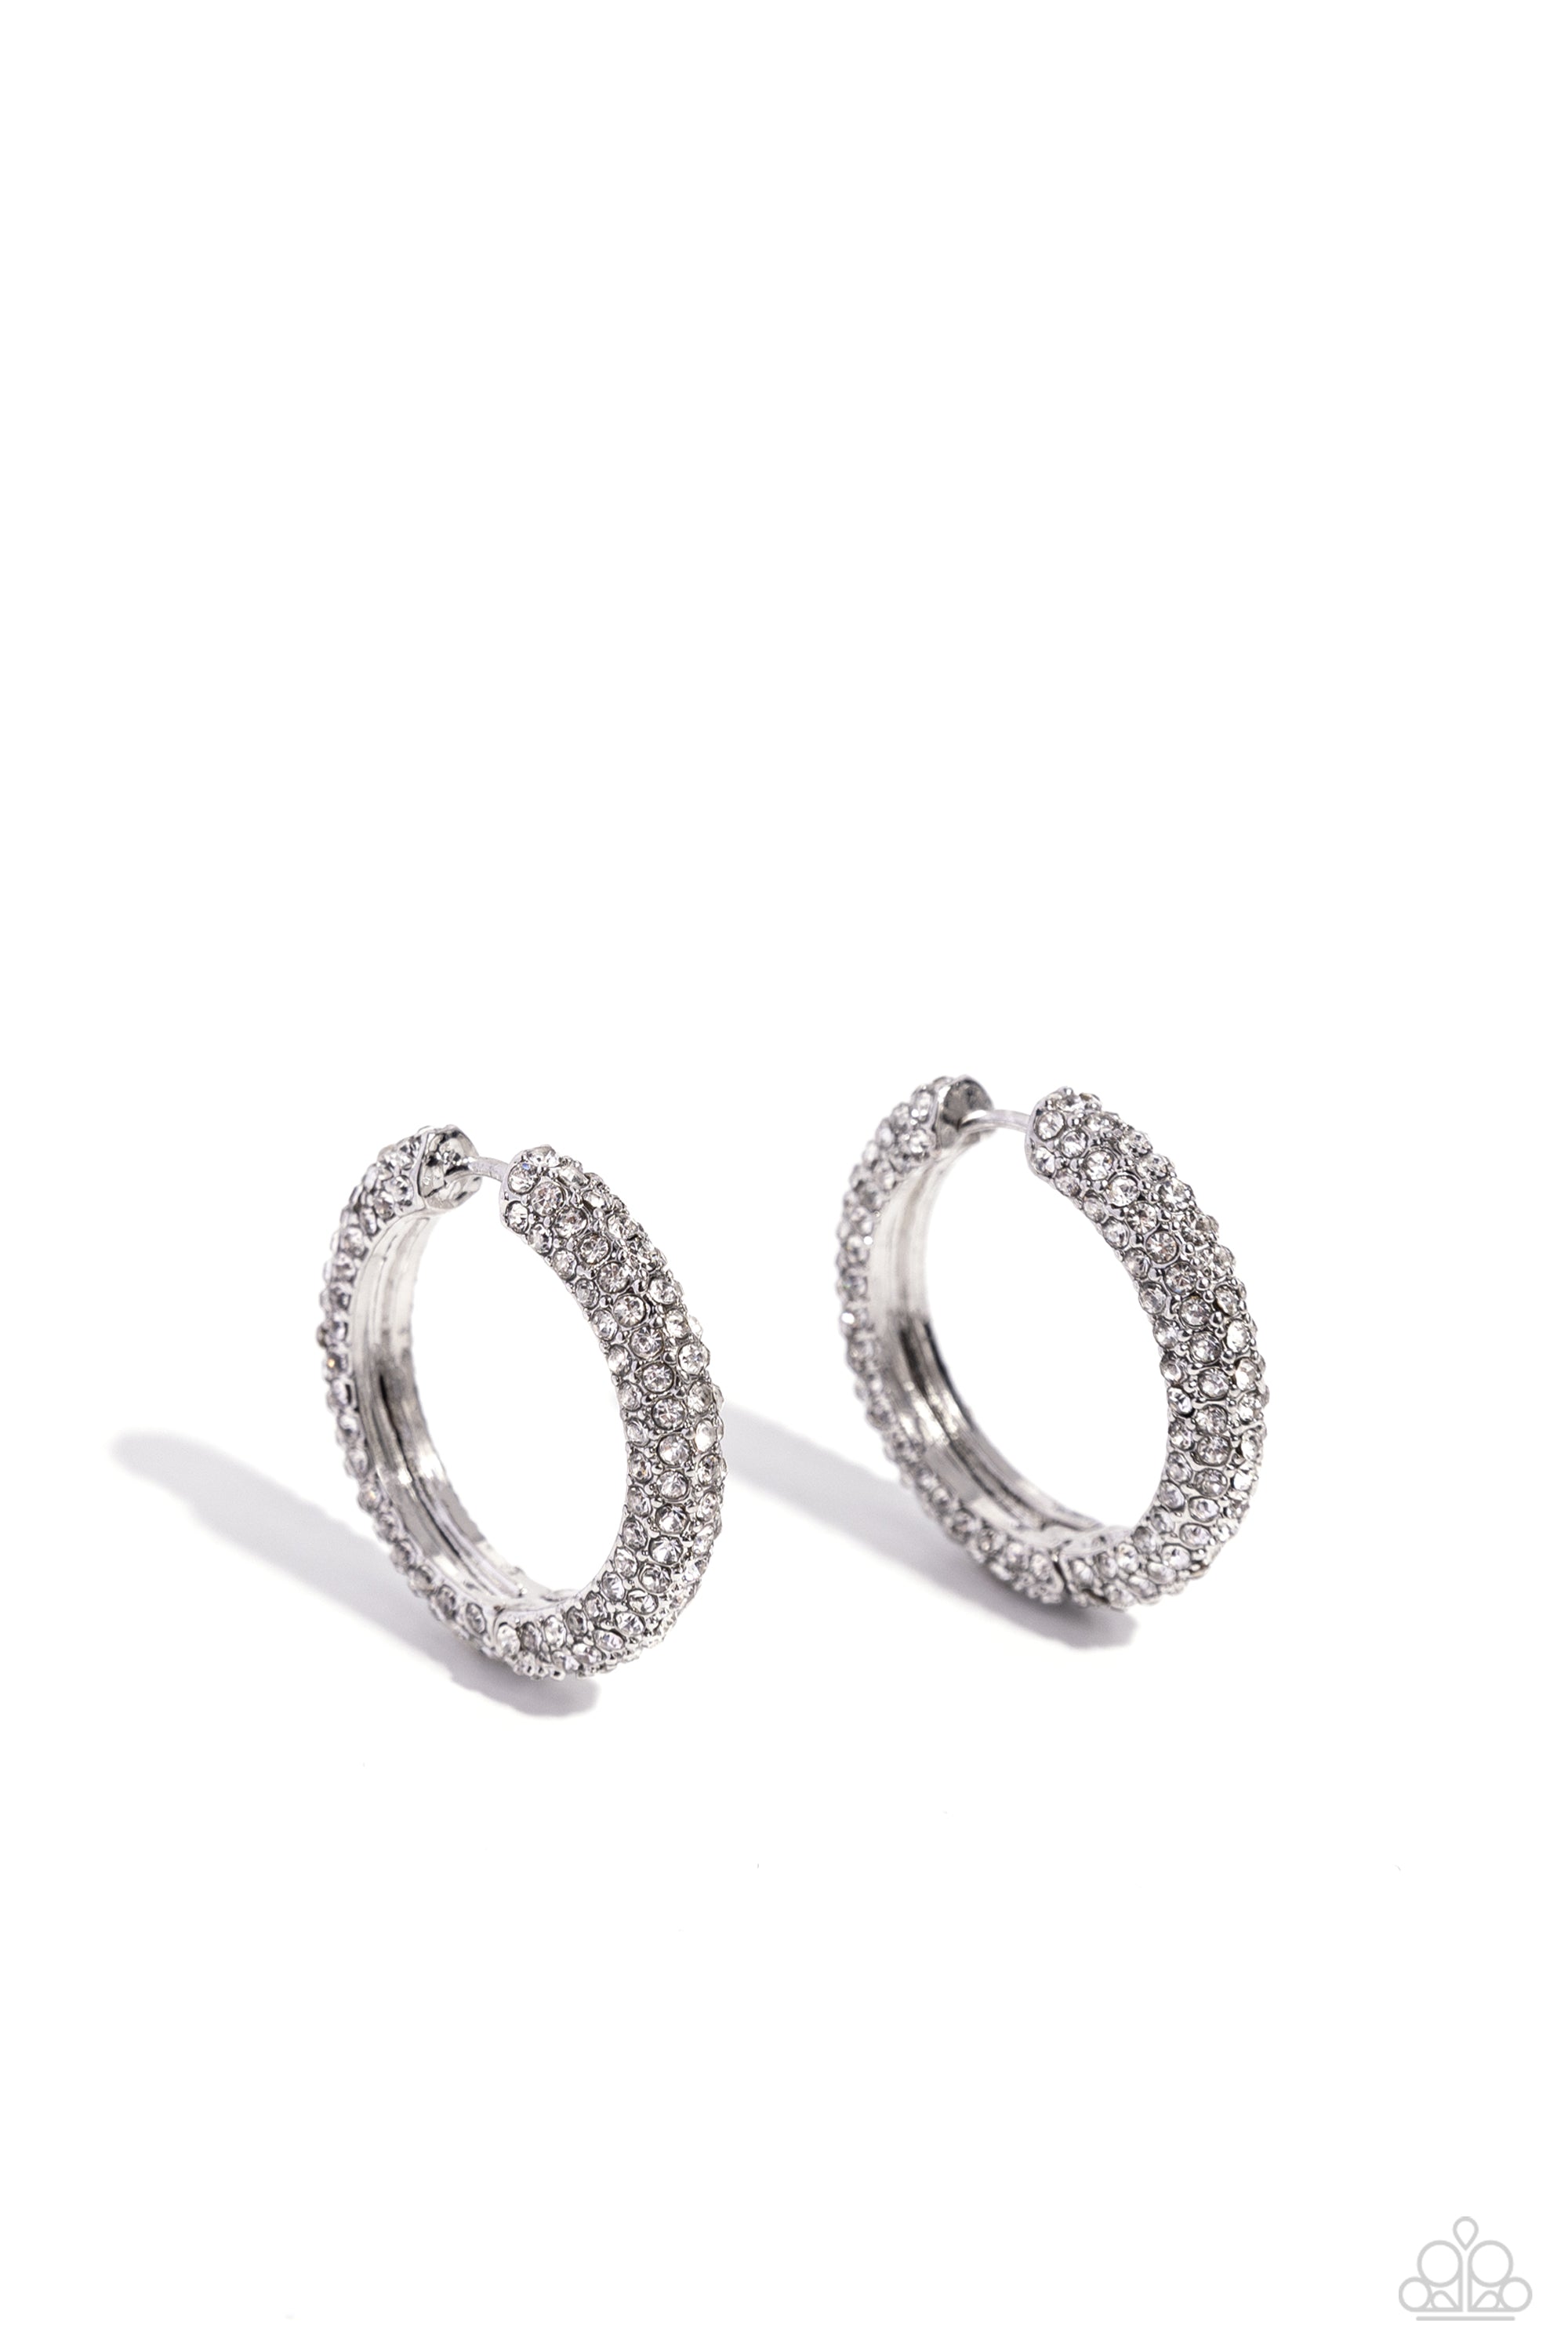 Glowing Praise White Rhinestone Hoop Earrings - Paparazzi Accessories- lightbox - CarasShop.com - $5 Jewelry by Cara Jewels